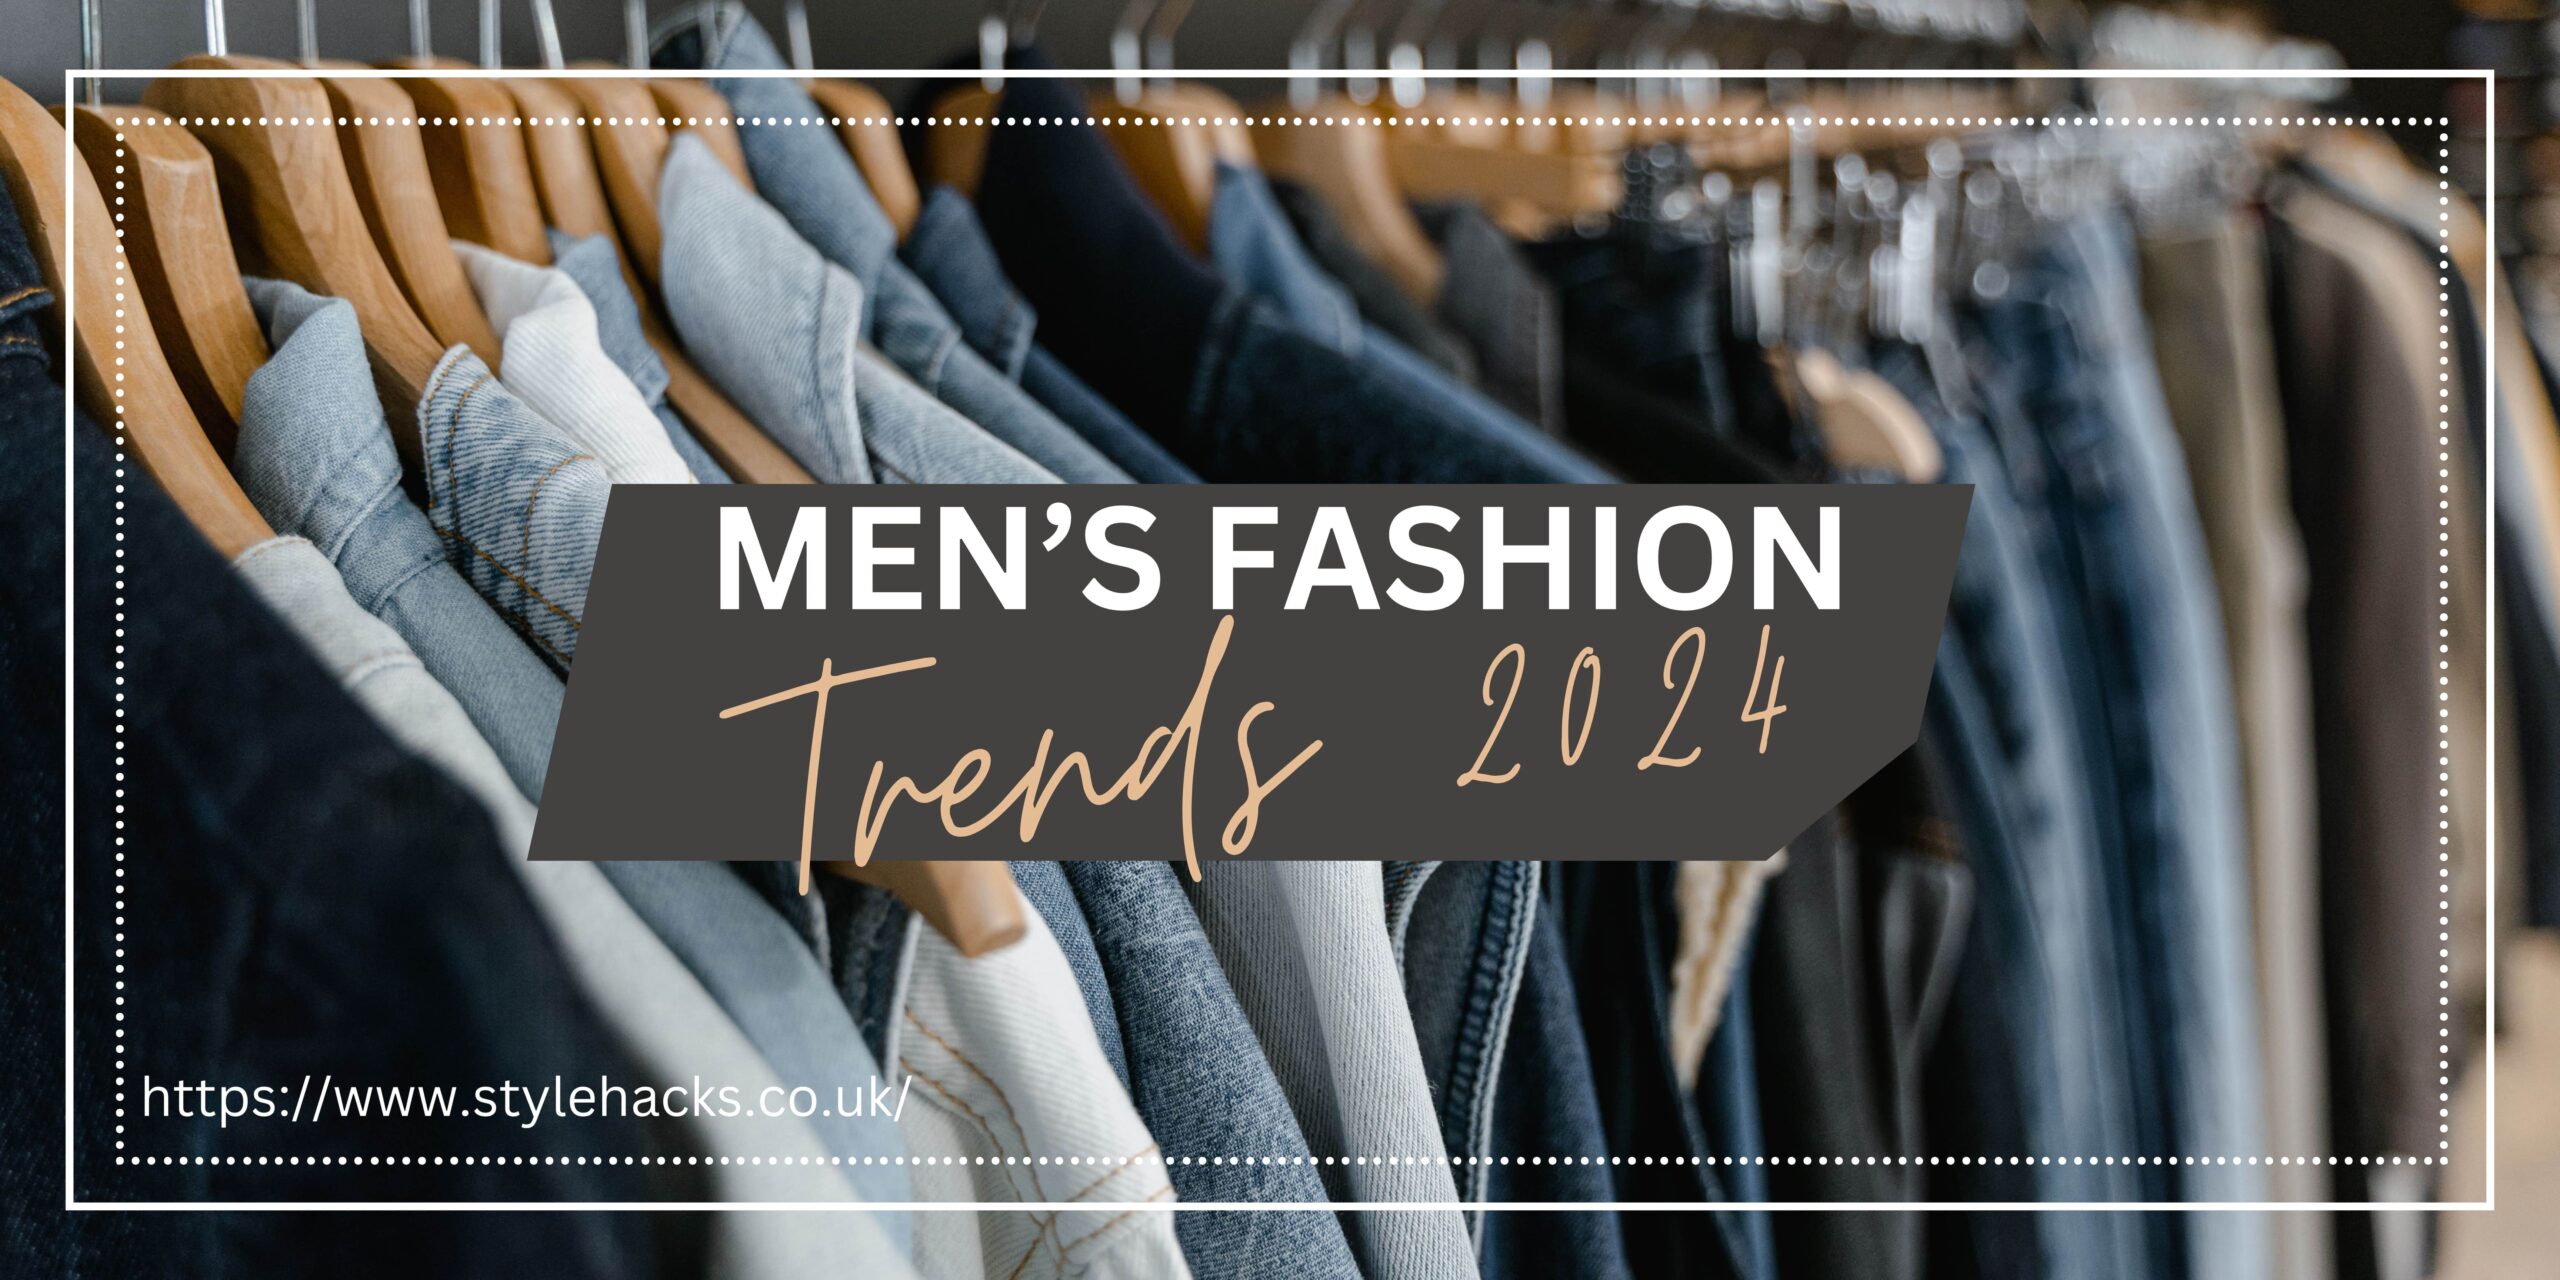 Trends in Men's Fashion